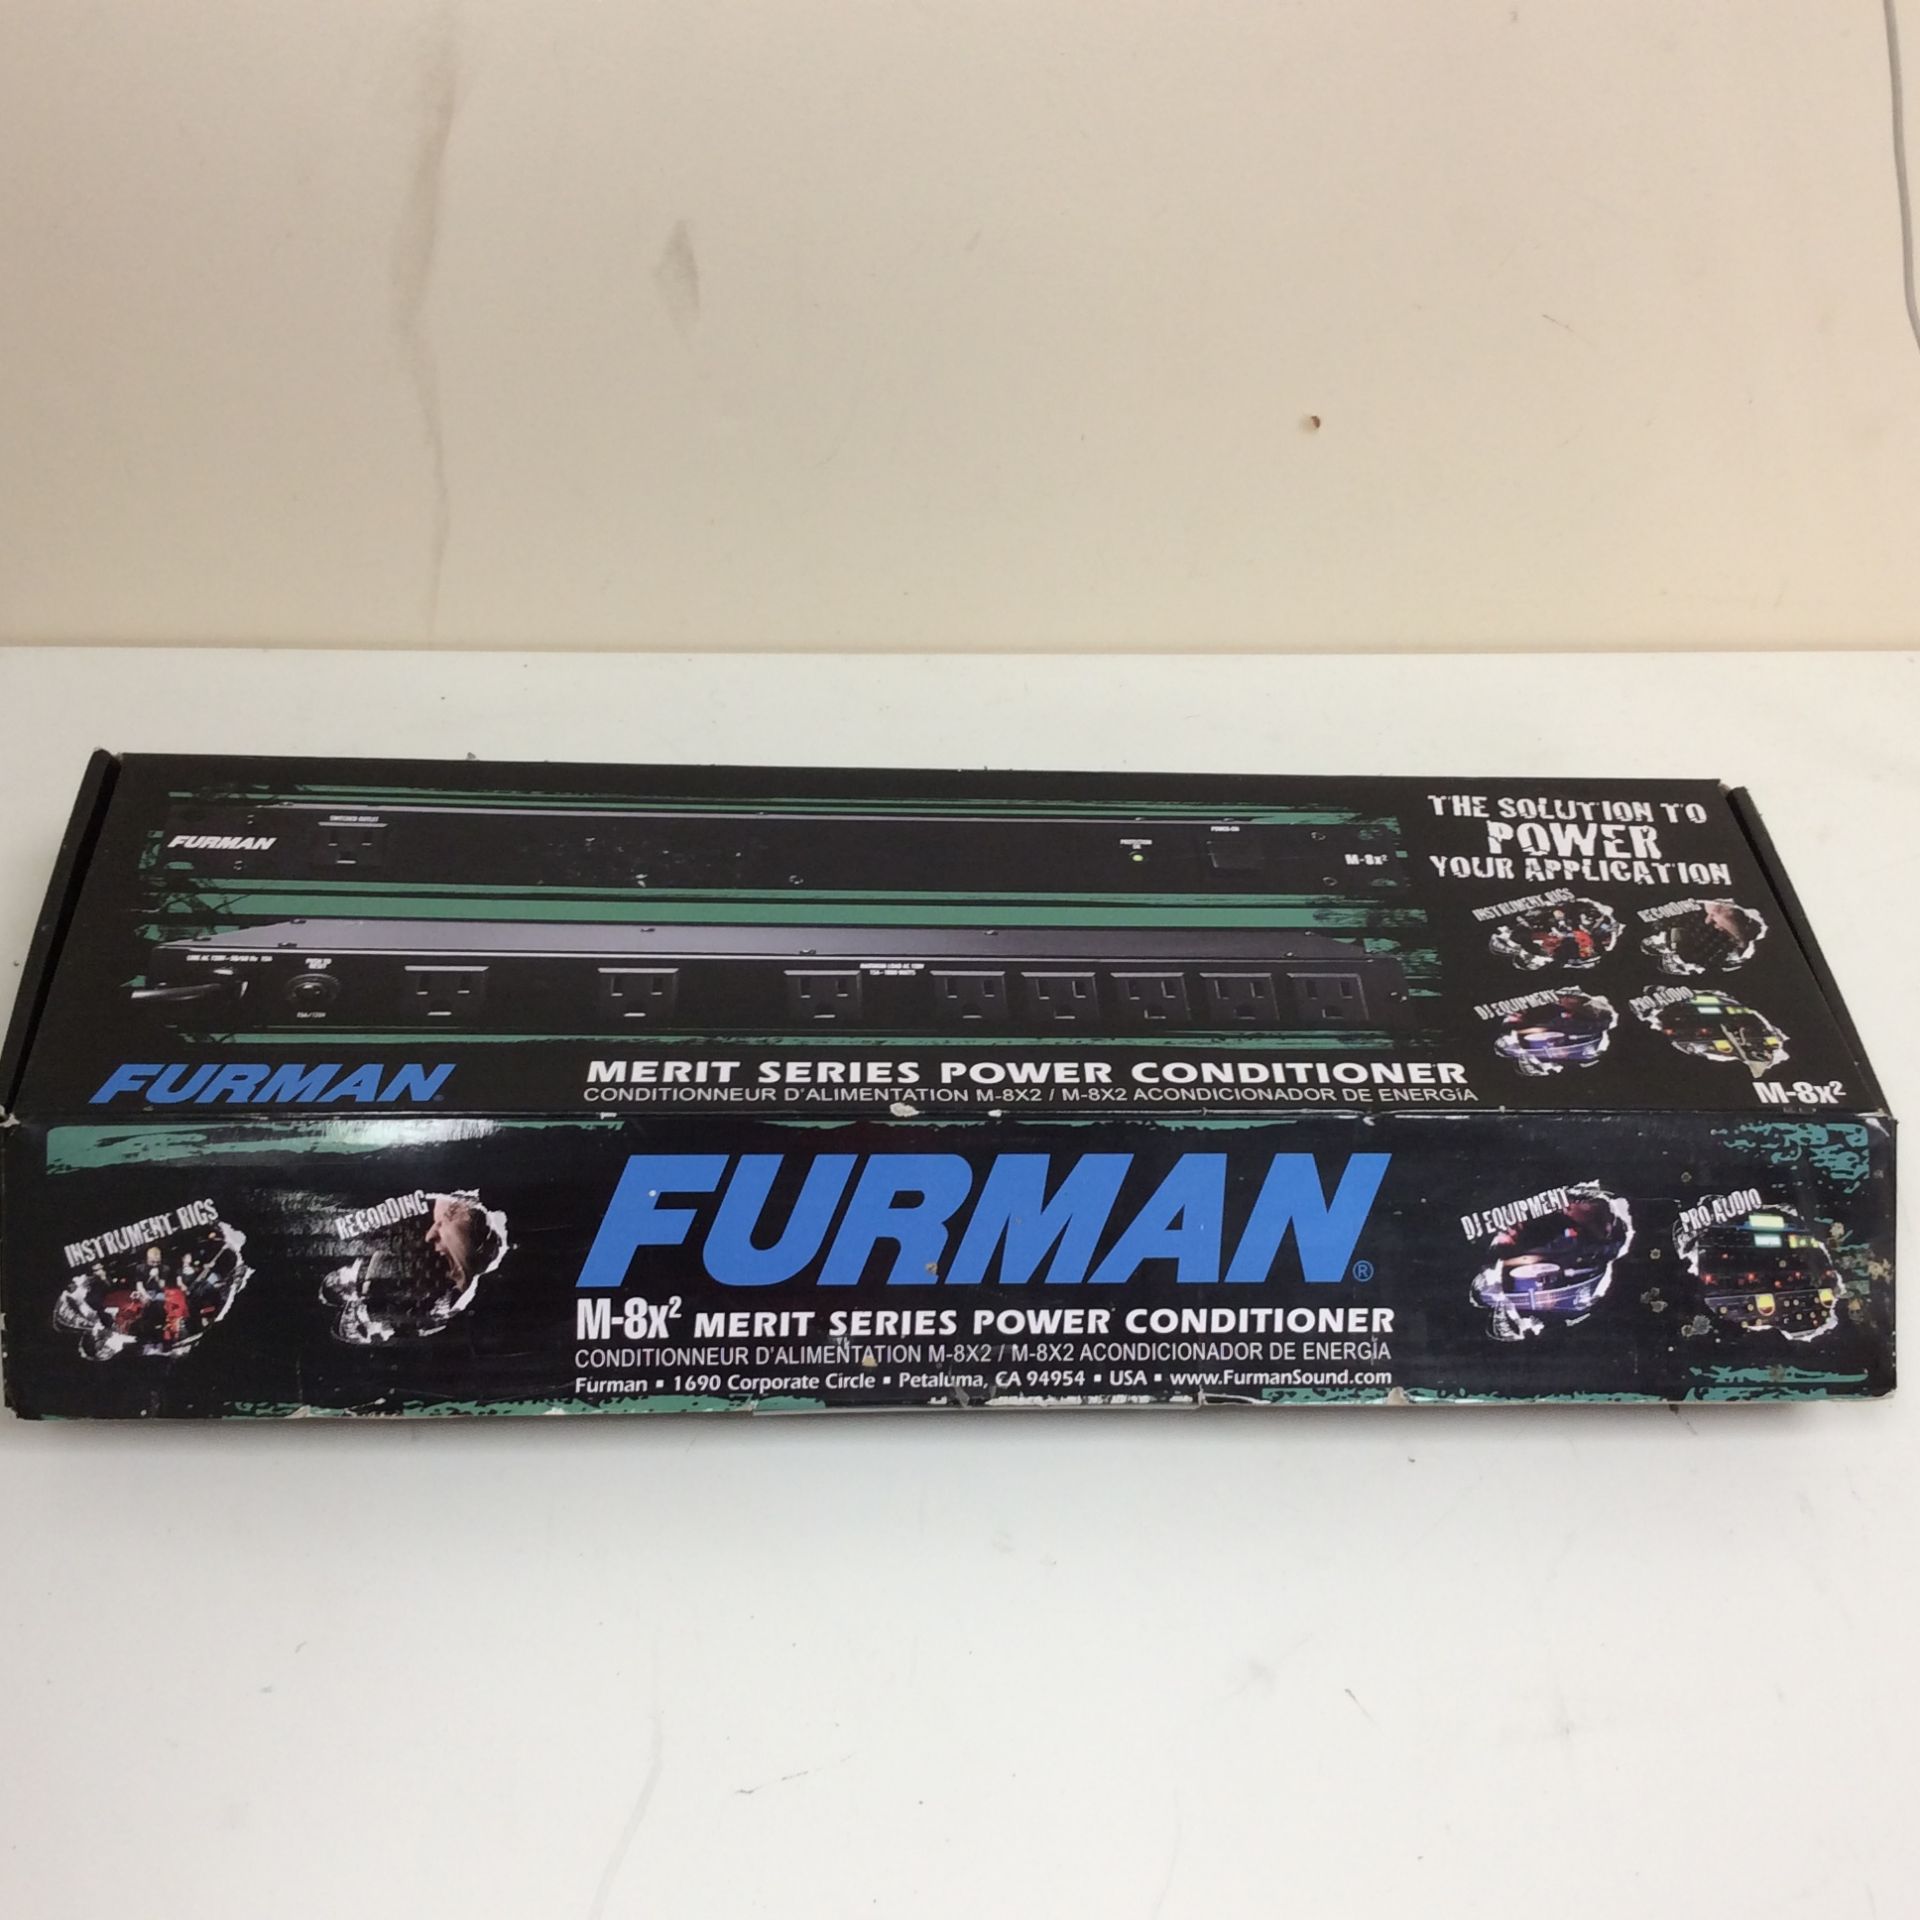 Furman m-8x2 merit series power conditioner